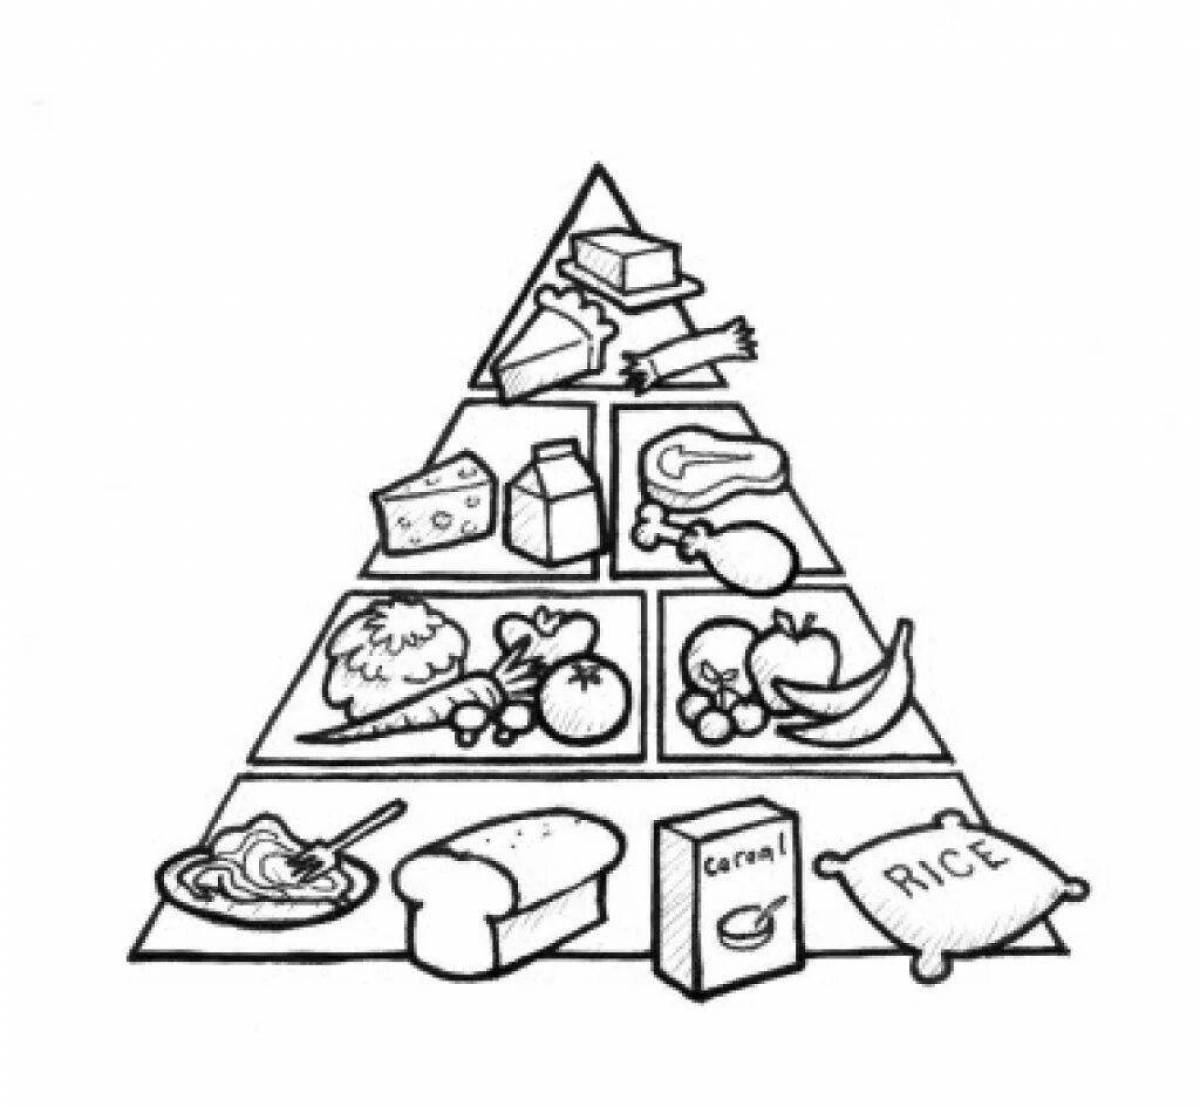 Food pyramid #16